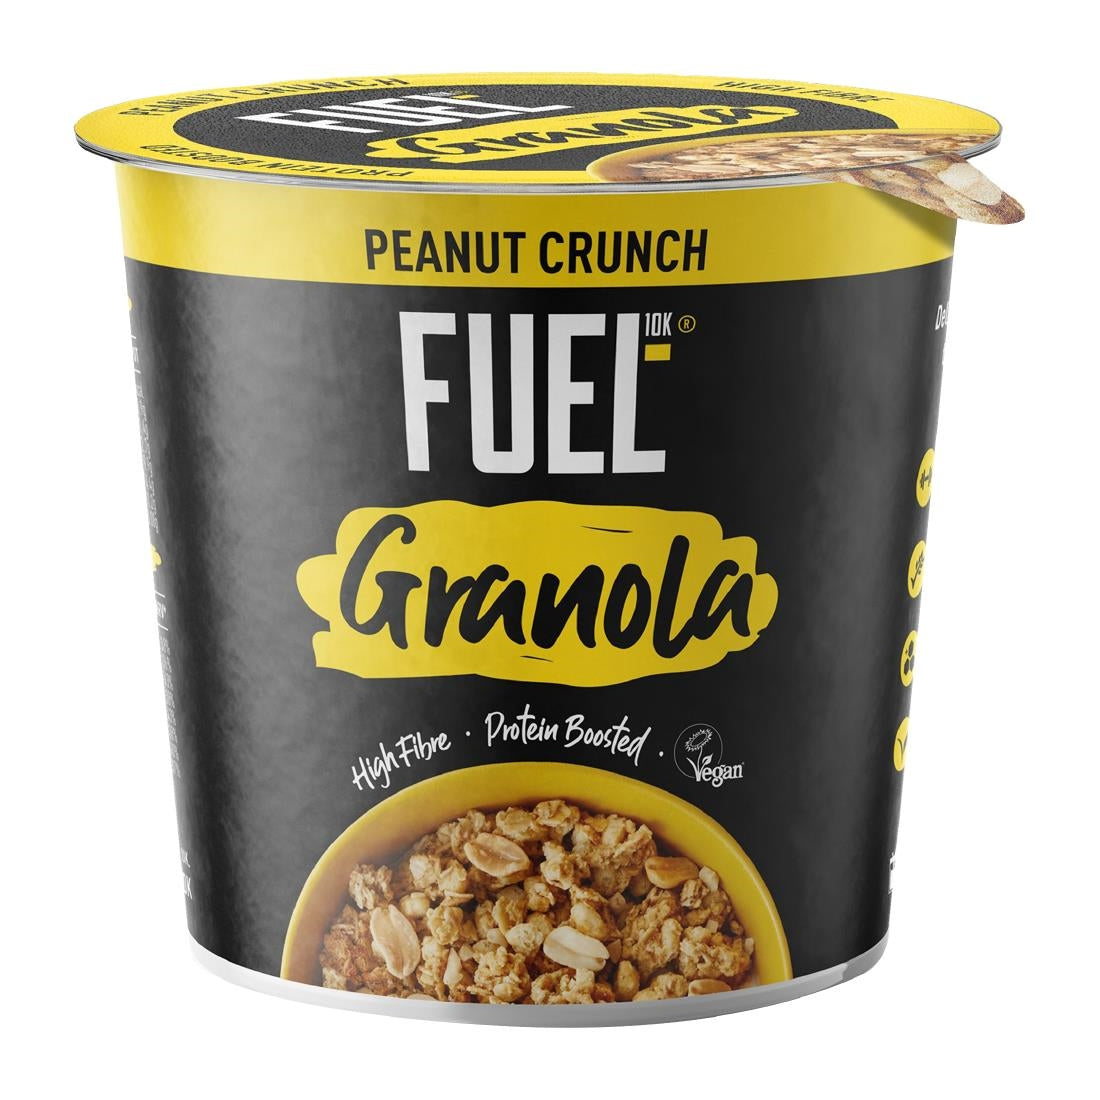 HS847 FUEL 10K Peanut Crunch Granola 70g (Pack of 8)